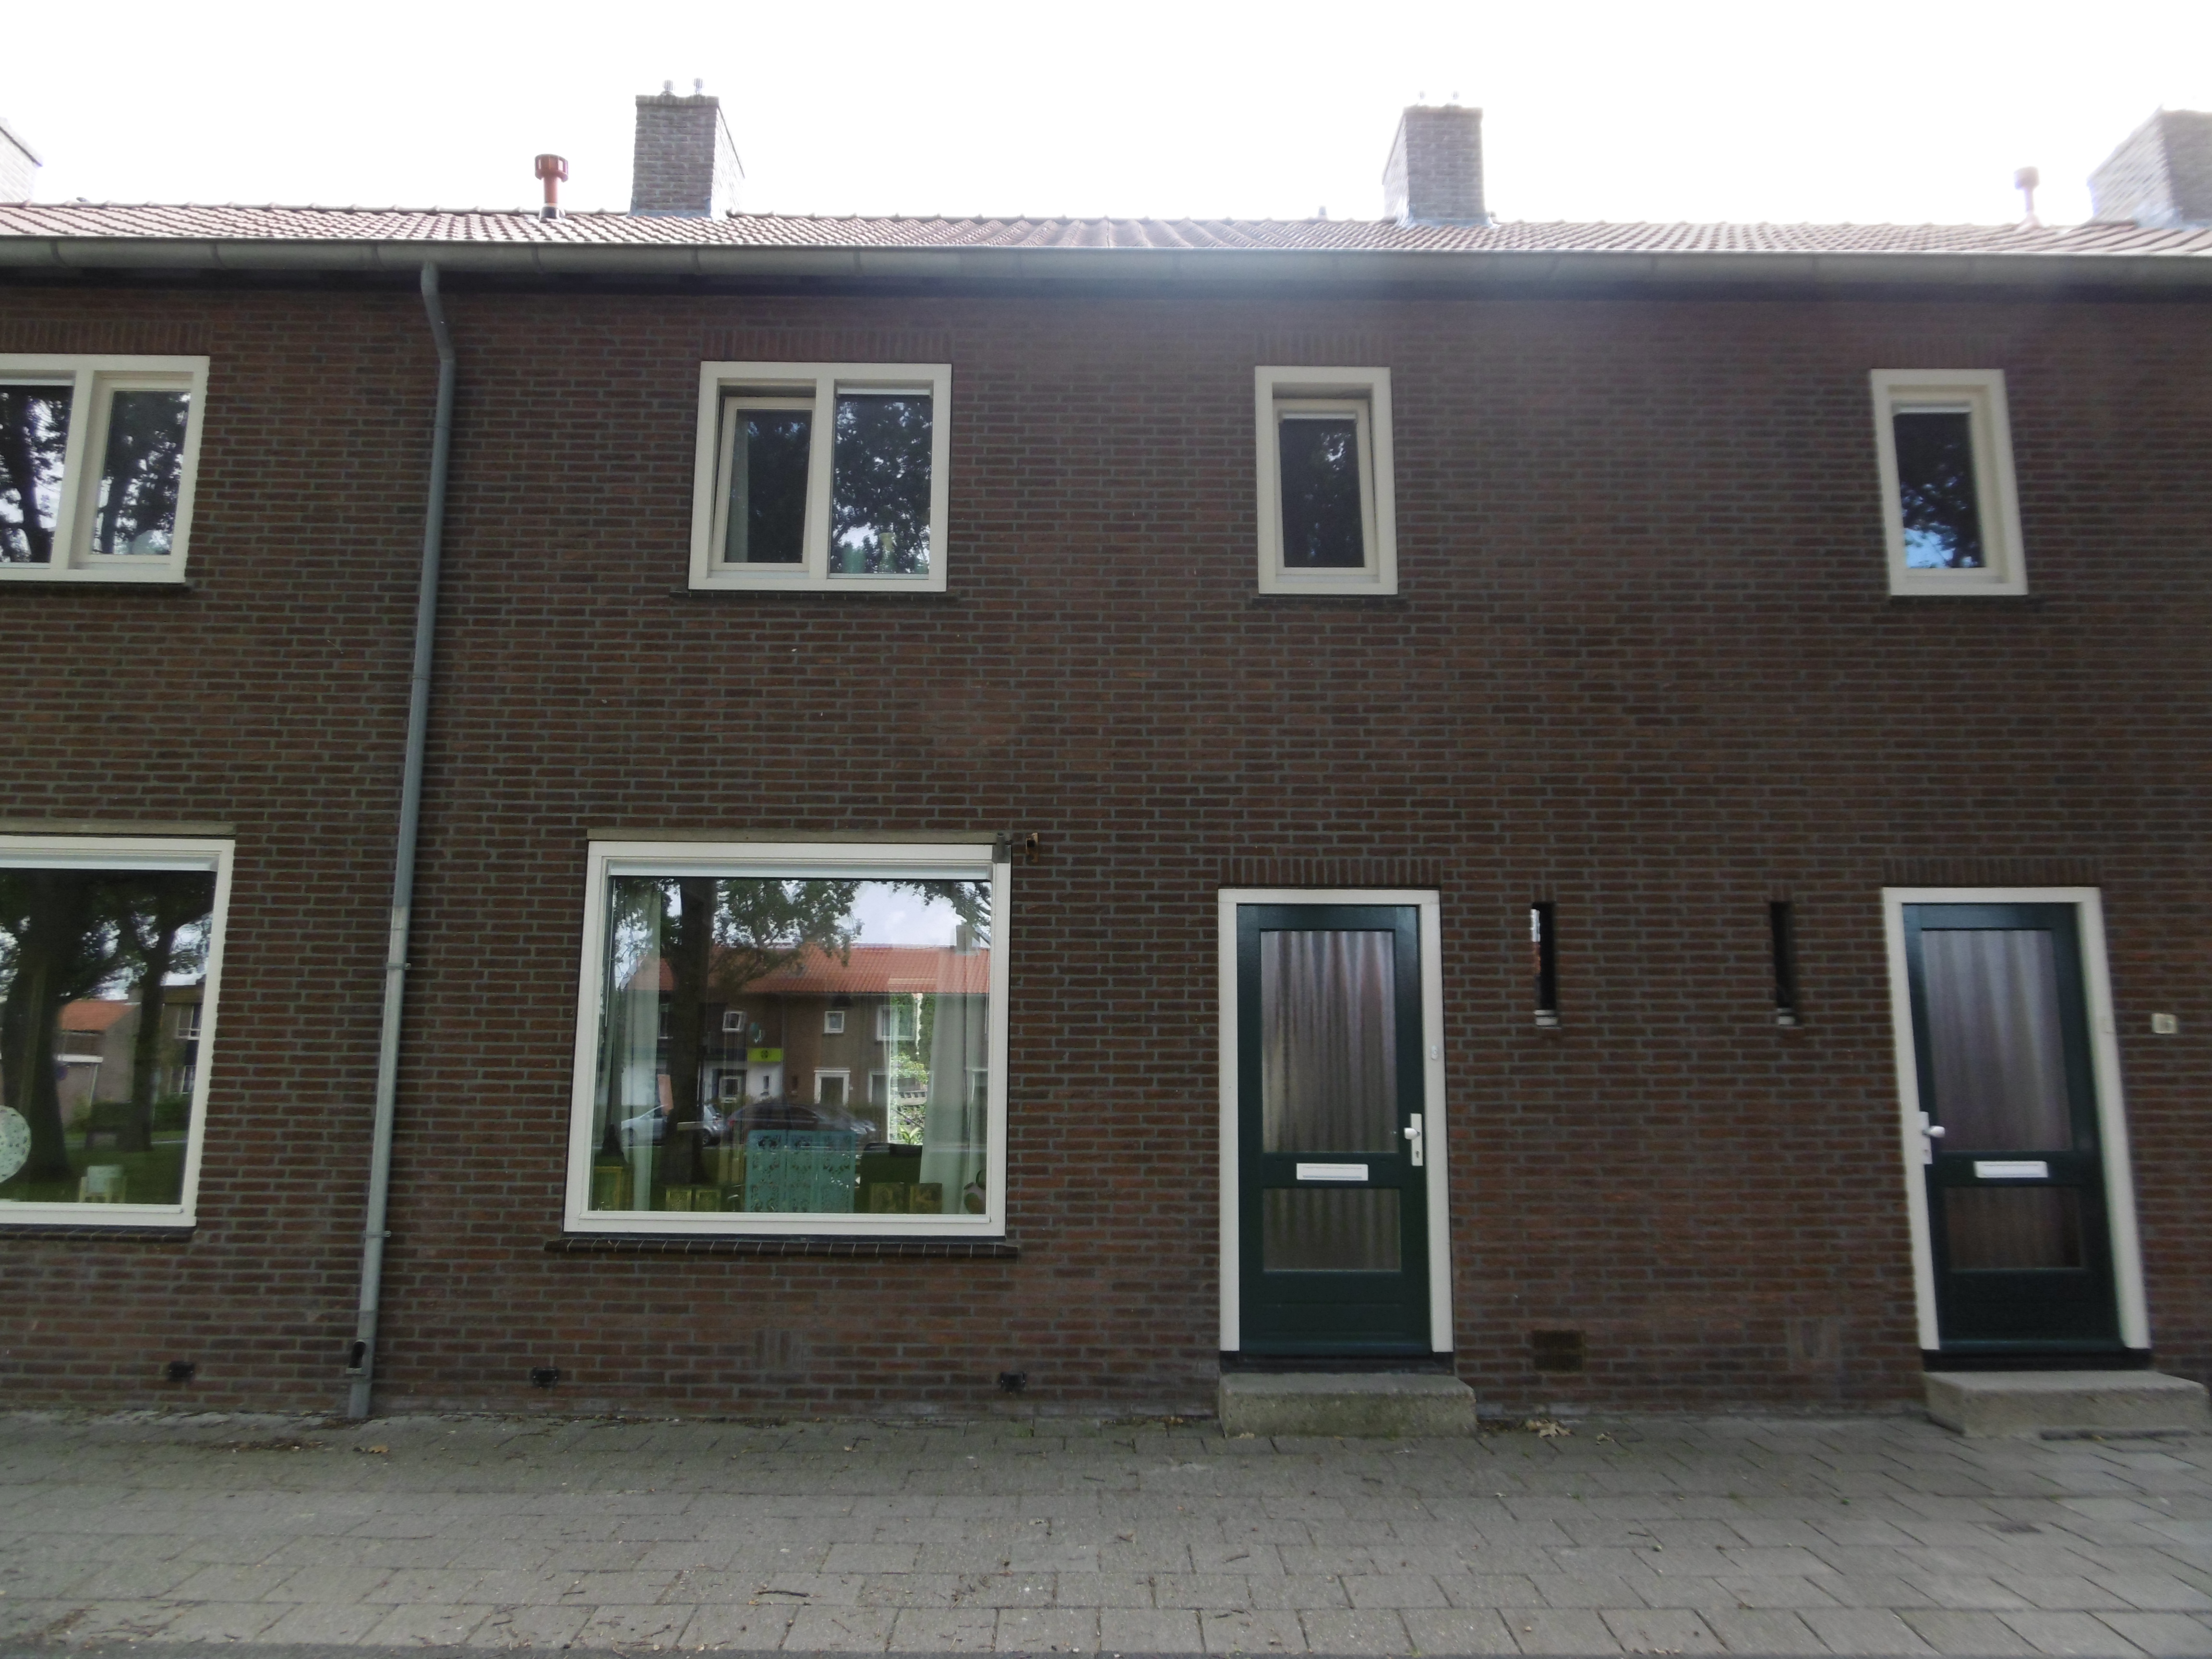 Baan 18, 8307 AV Ens, Nederland